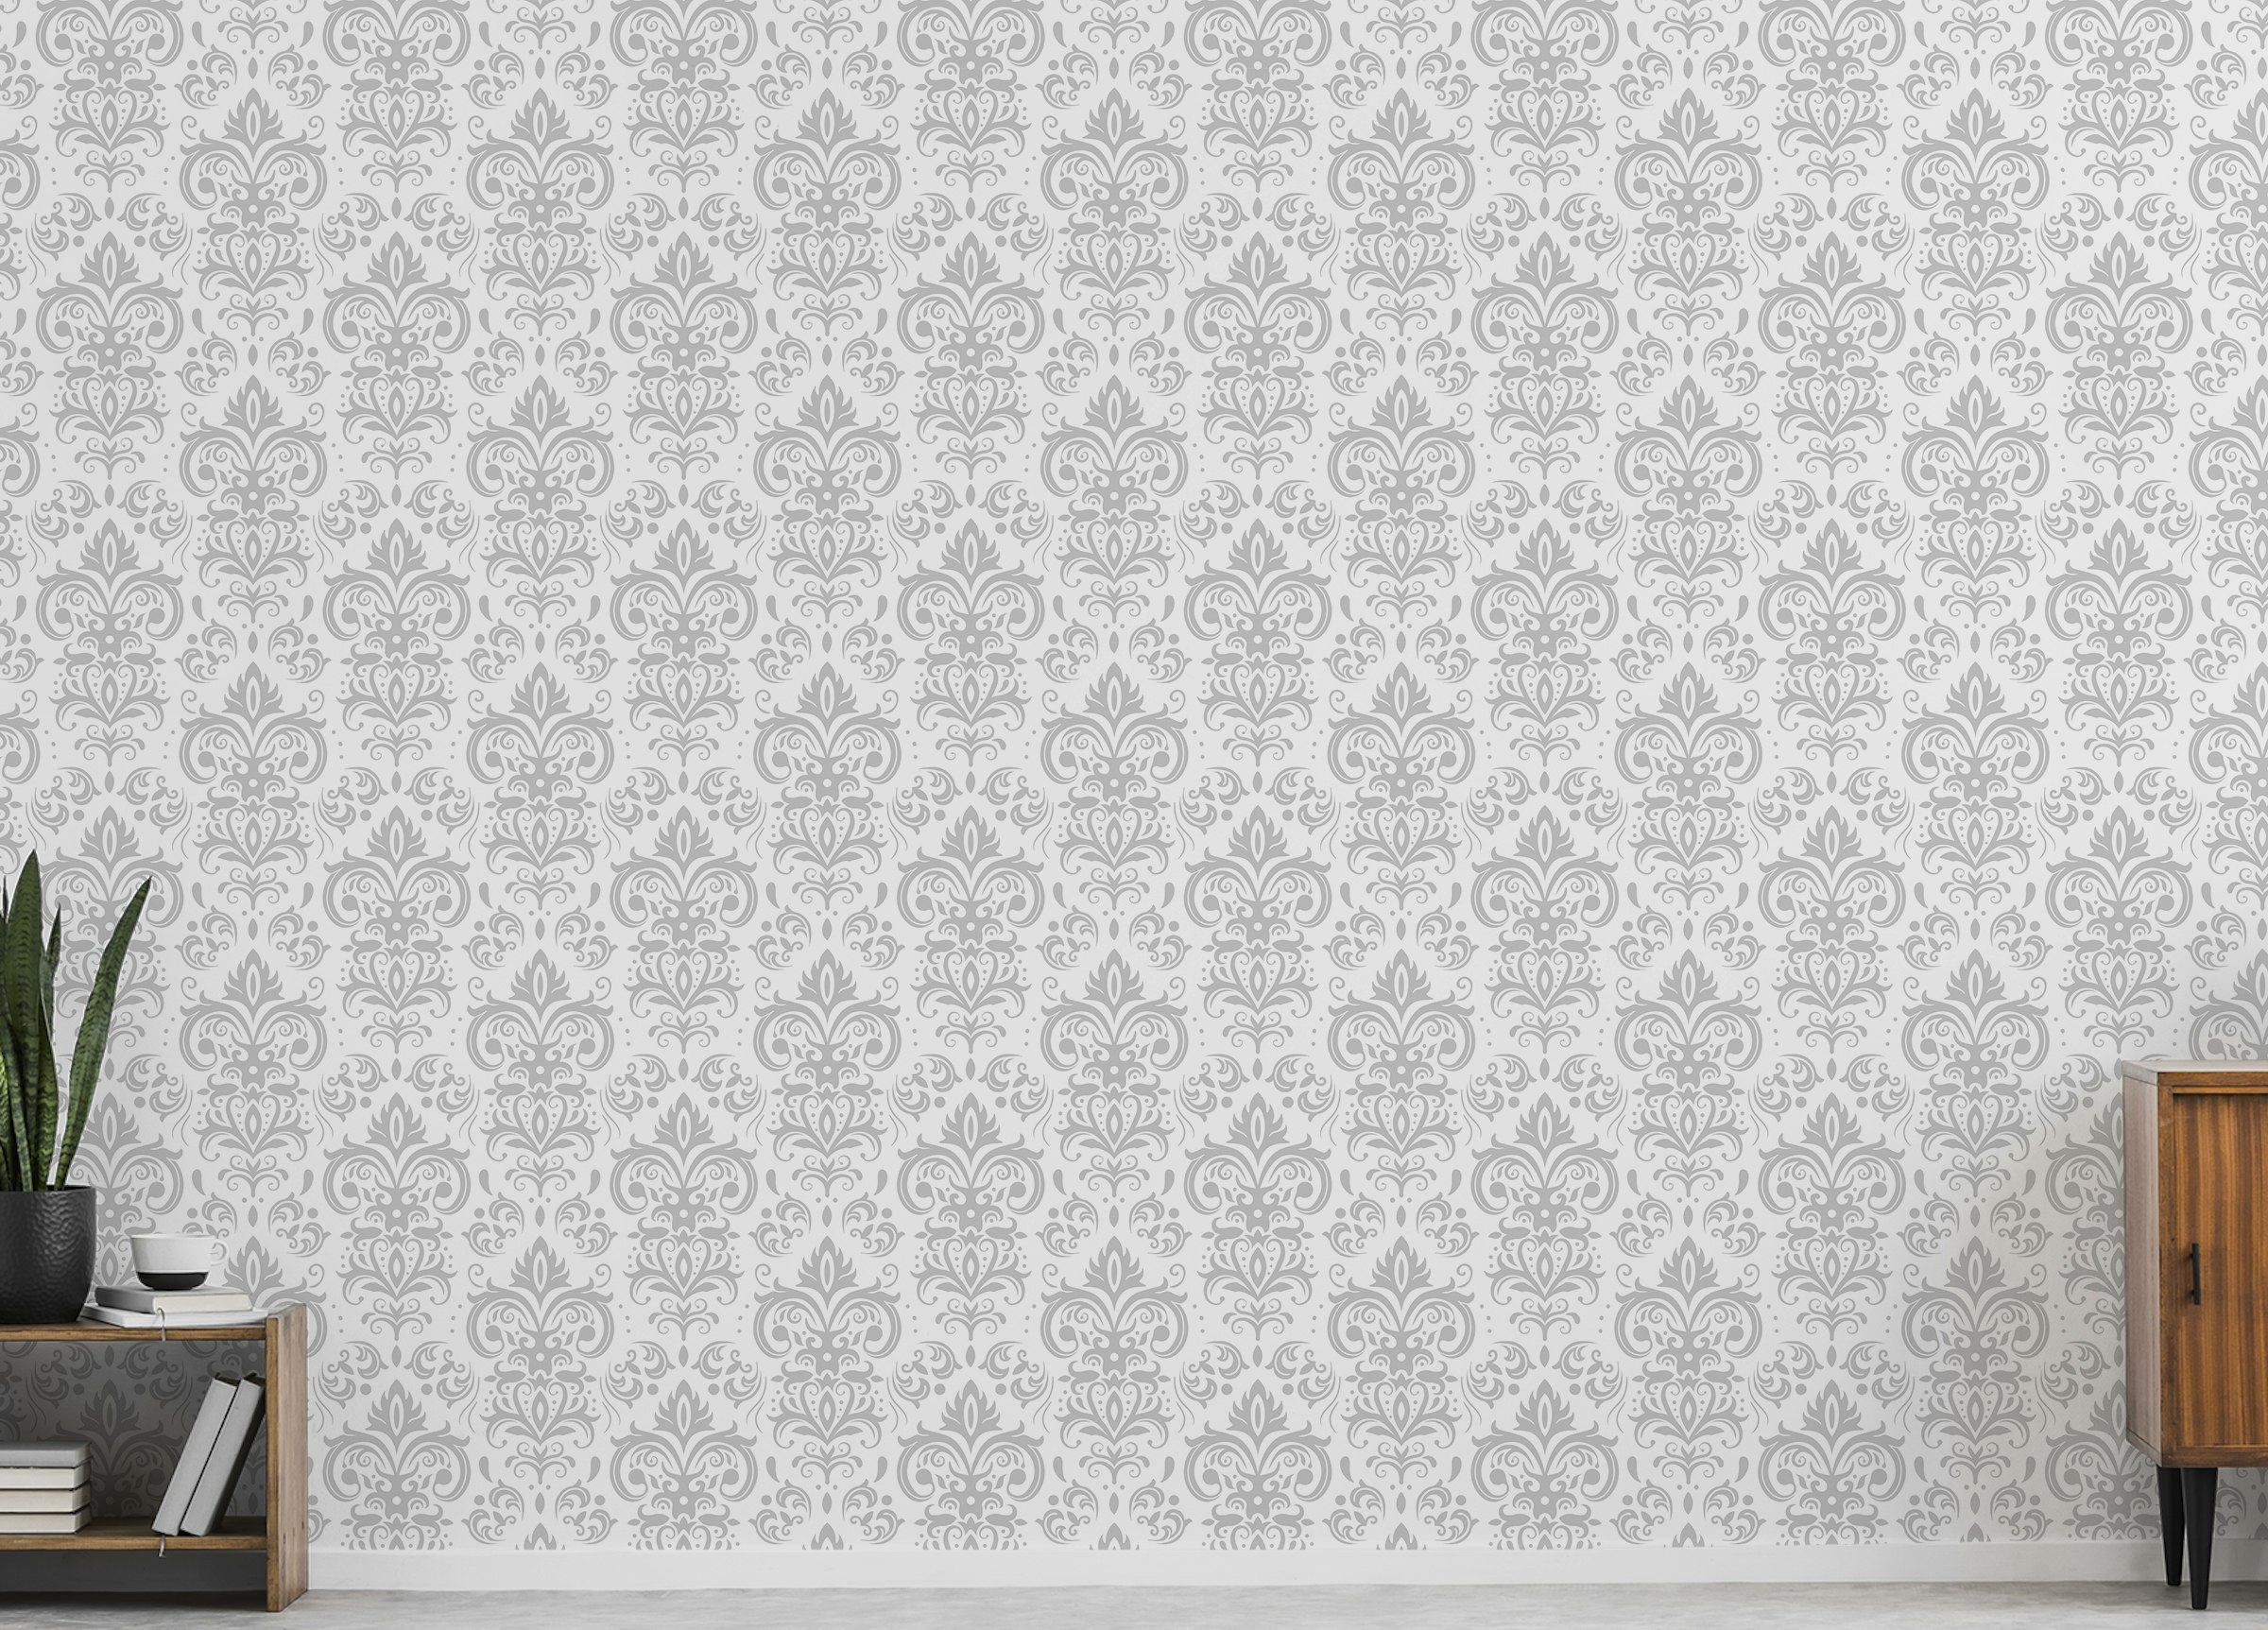 Peel and Stick Stylish Rococo White Damask Peel and Stick Wallpaper